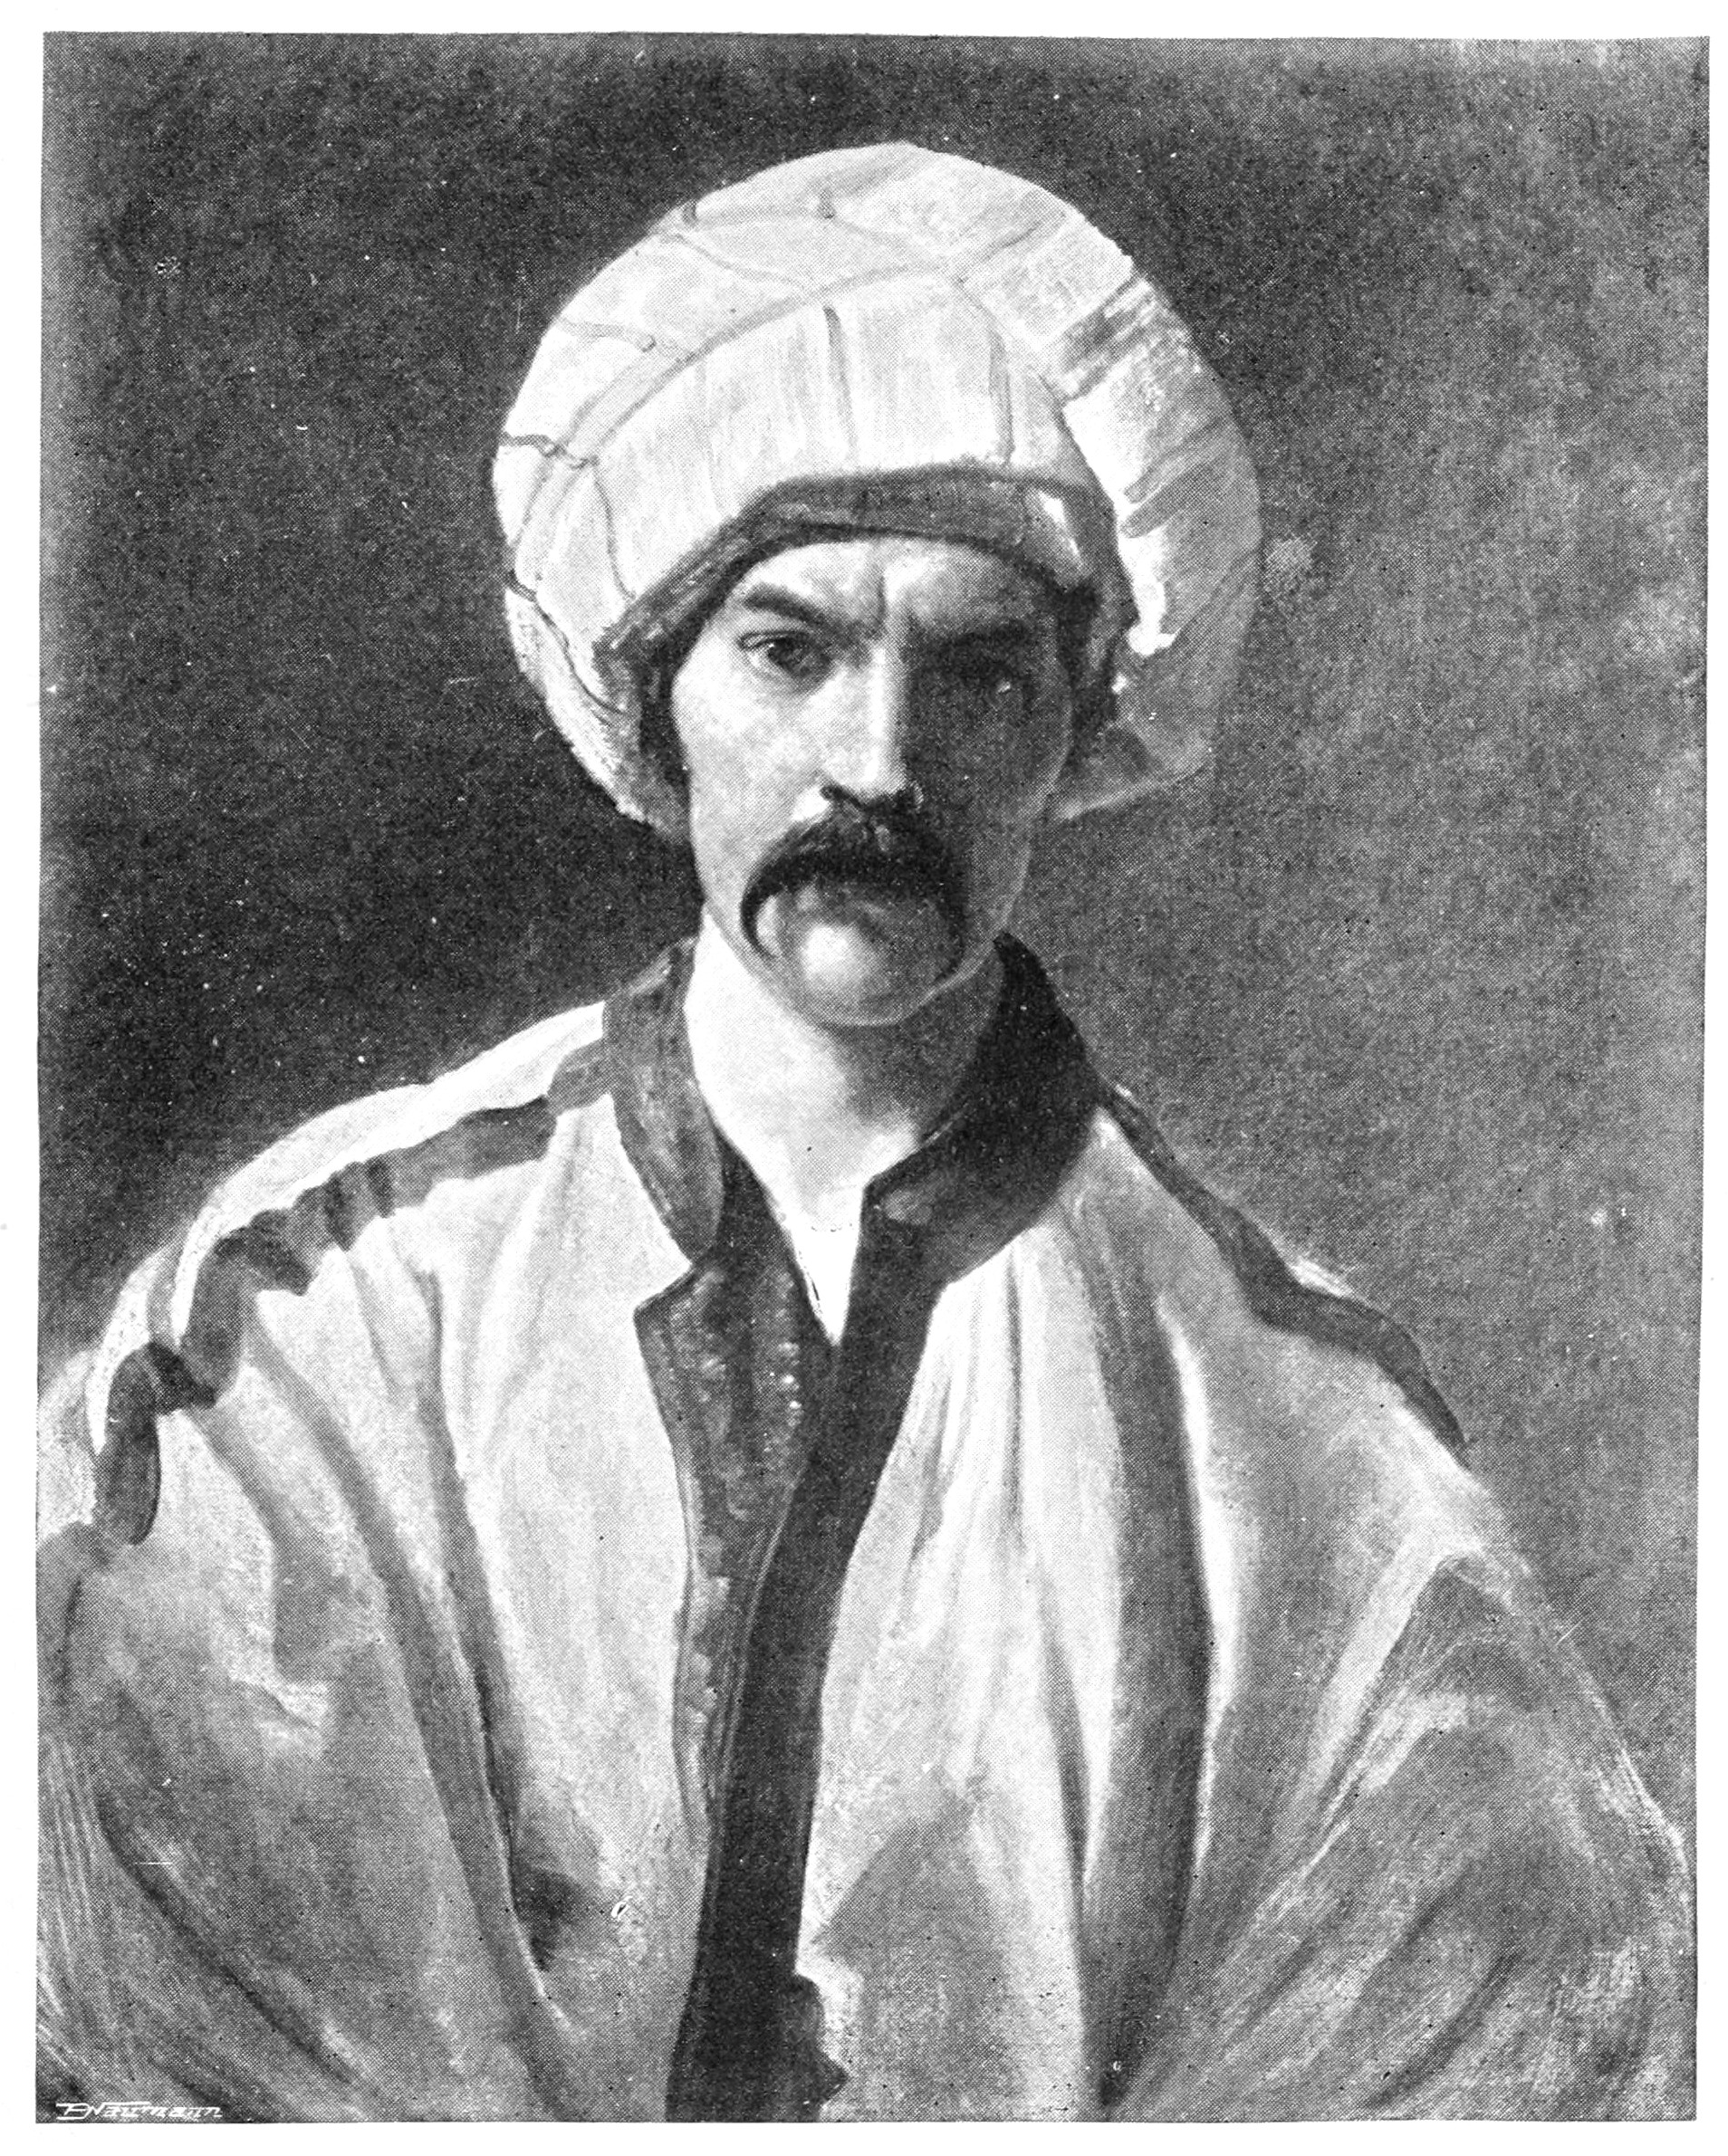 Image source: Burton in Persian disguise as “Mirza Abdullah the Bushri” (ca. 1849–50).